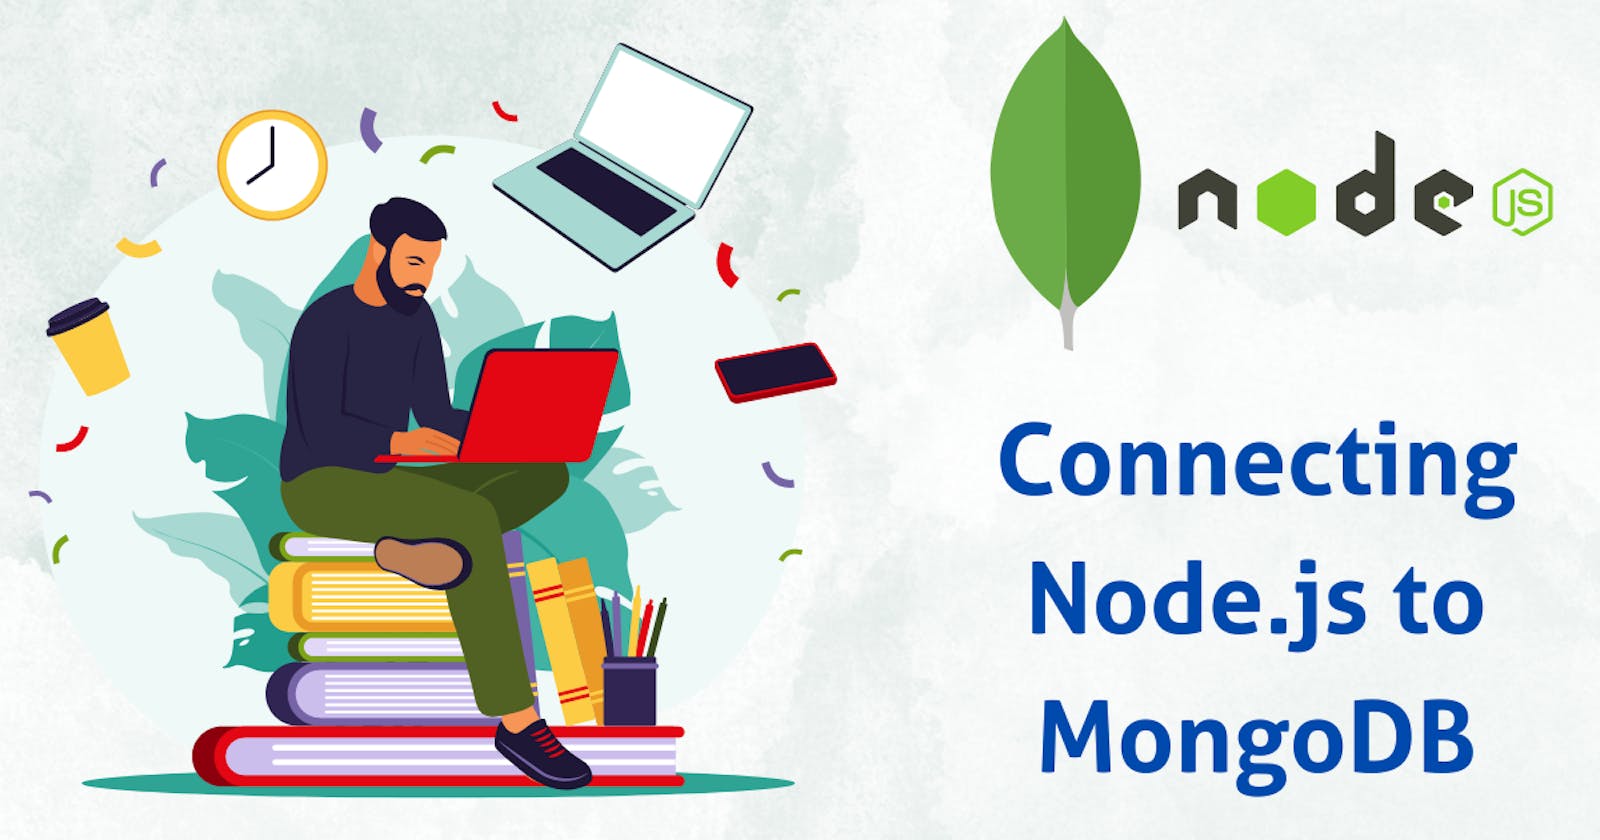 Connecting Node.js to MongoDB: Integrating MongoDB with Node.js applications.